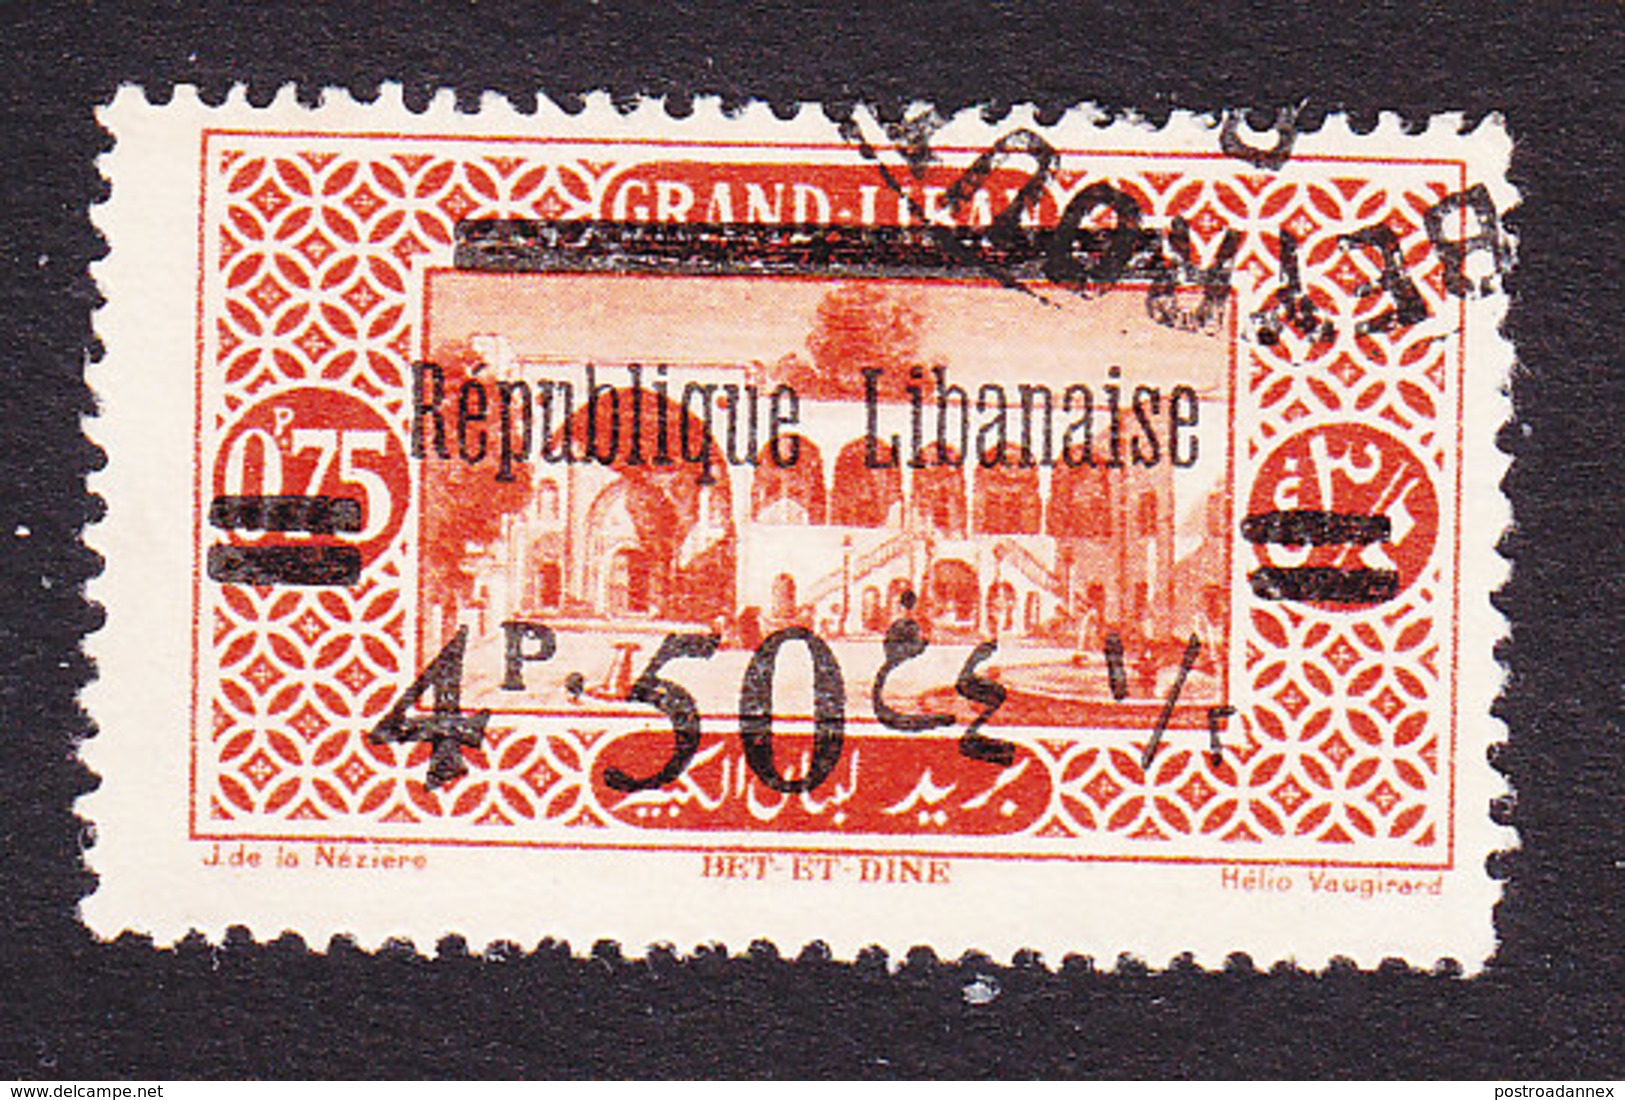 Lebanon, Scott #97, Used, Scenes Of Lebanon Overprinted, Issued 1928 - Used Stamps